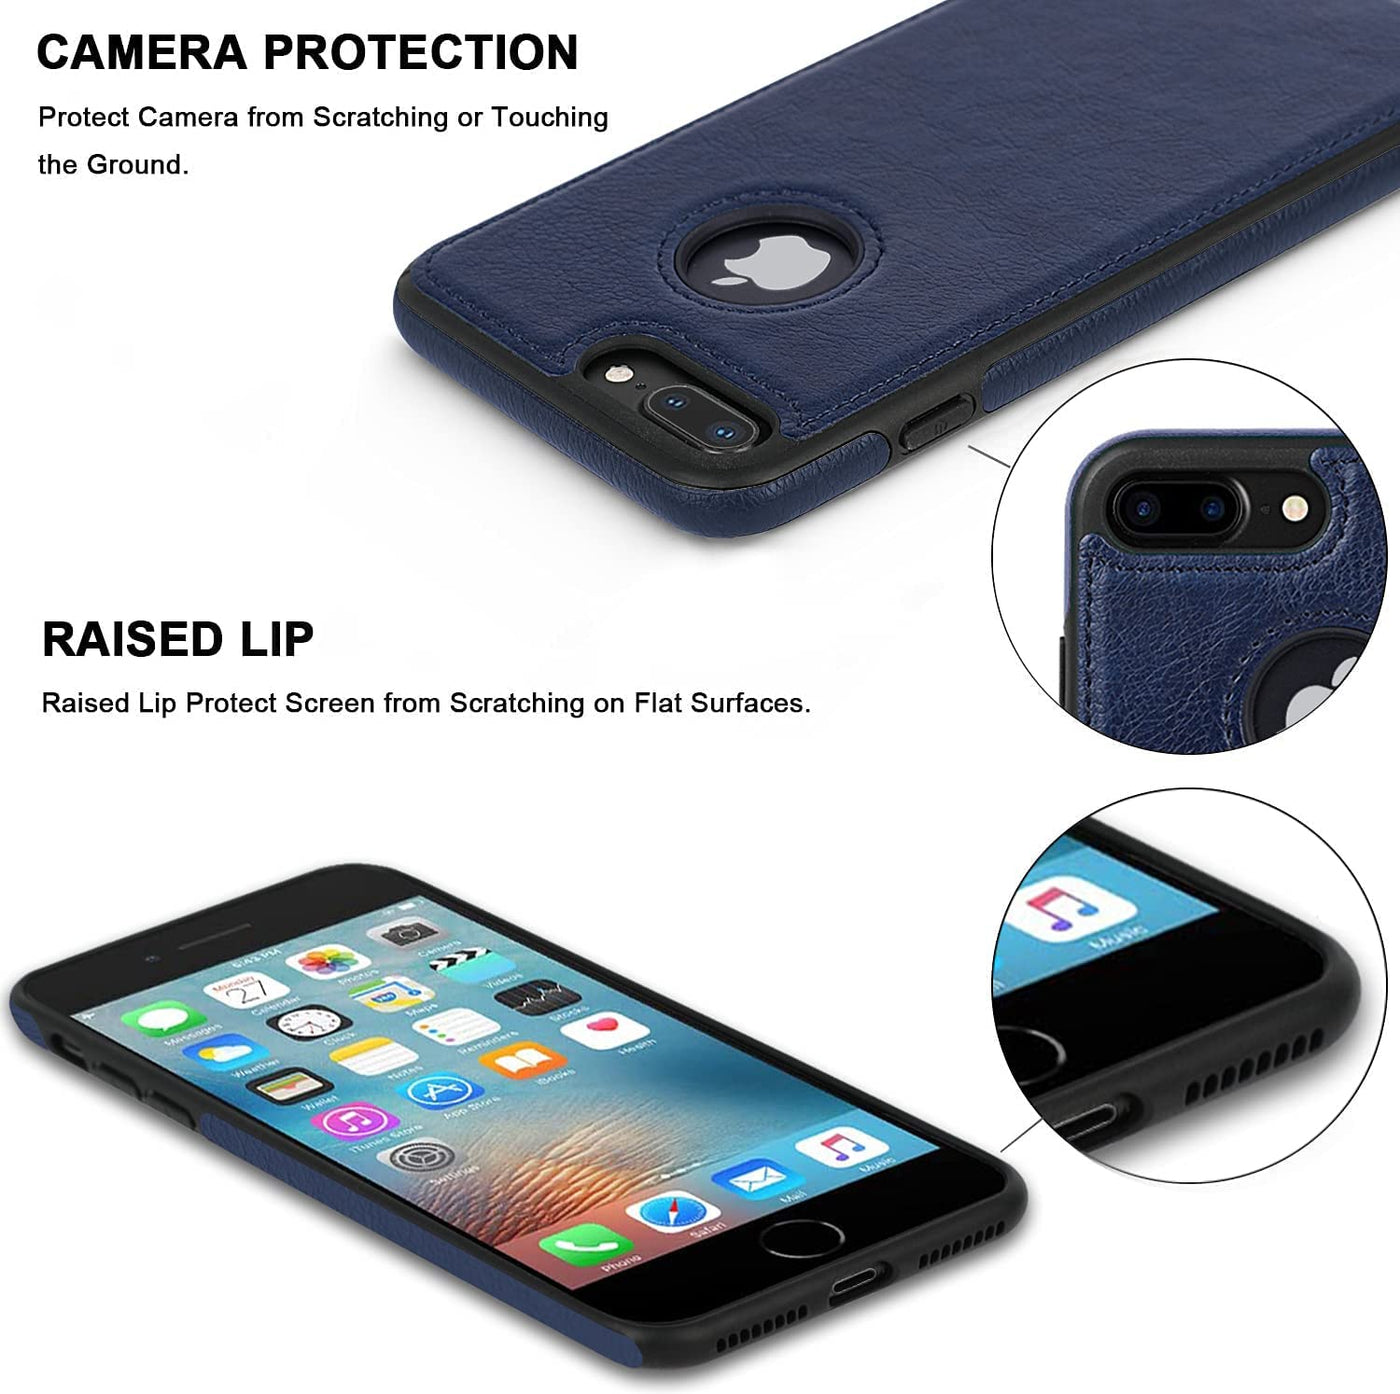 Excelsior Premium PU Leather Back Cover case For Apple iPhone 7 Plus | iPhone 8 Plus